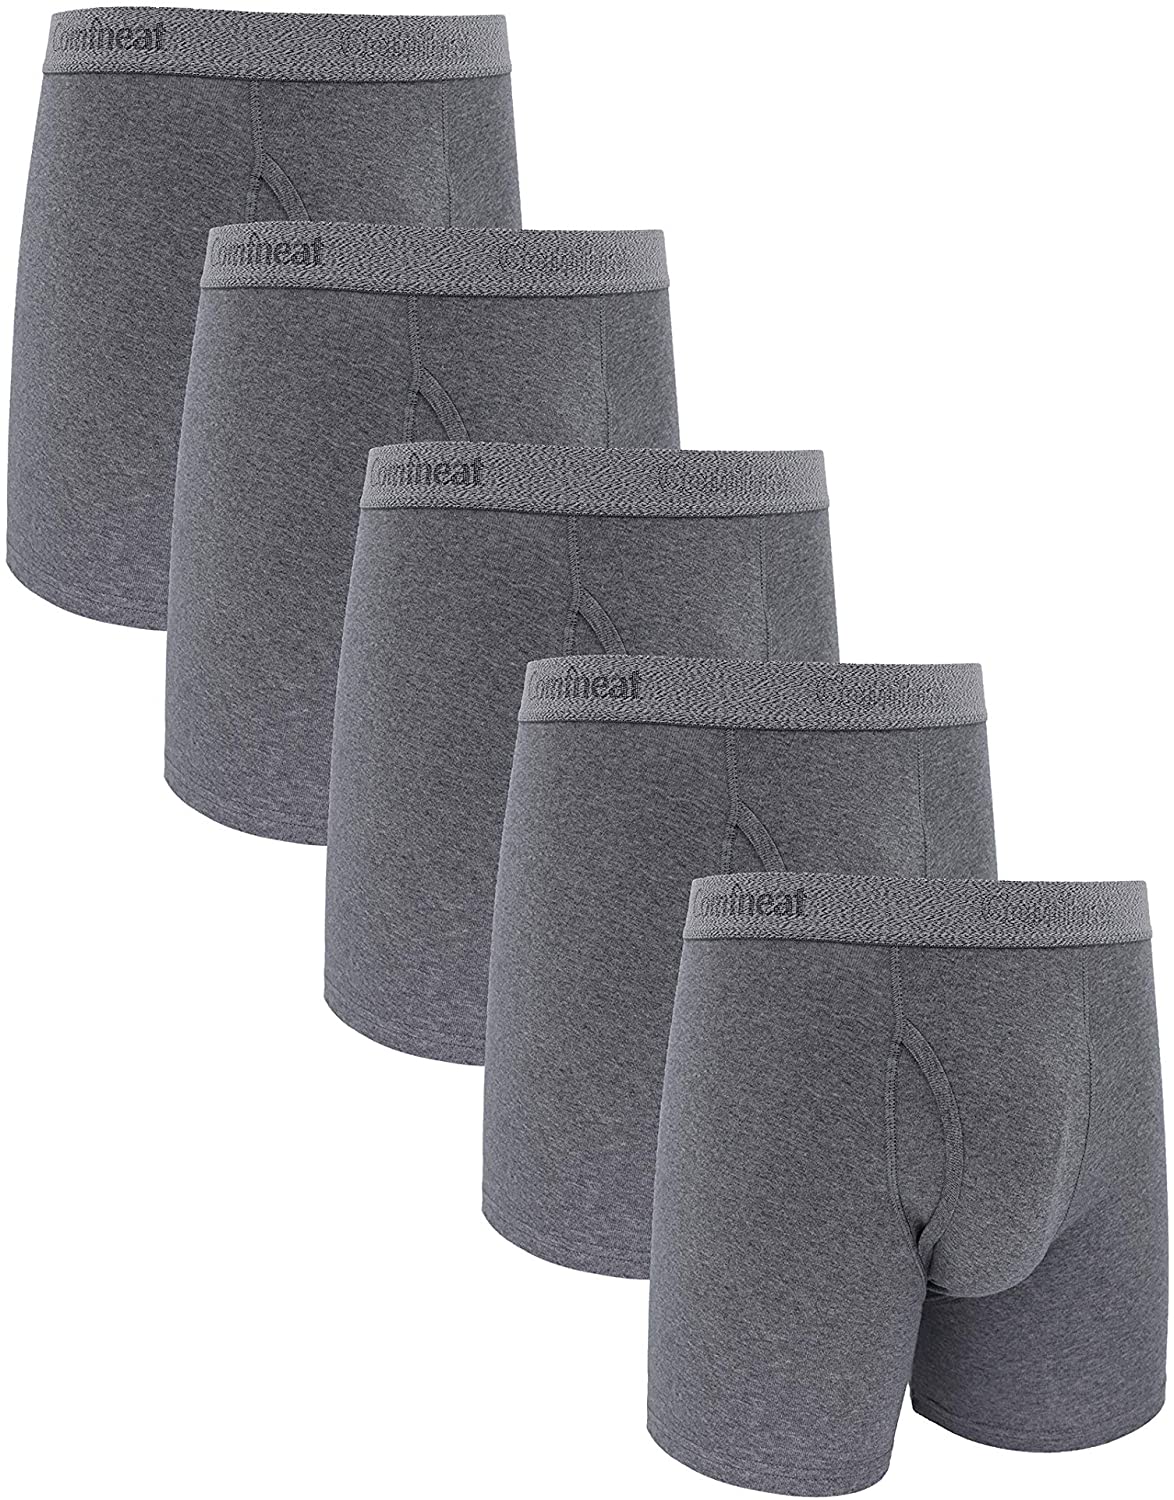 Comfneat Men's 5-Pack/7-Pack Boxer Briefs Cotton Spandex Tagless Comfy Underwear 